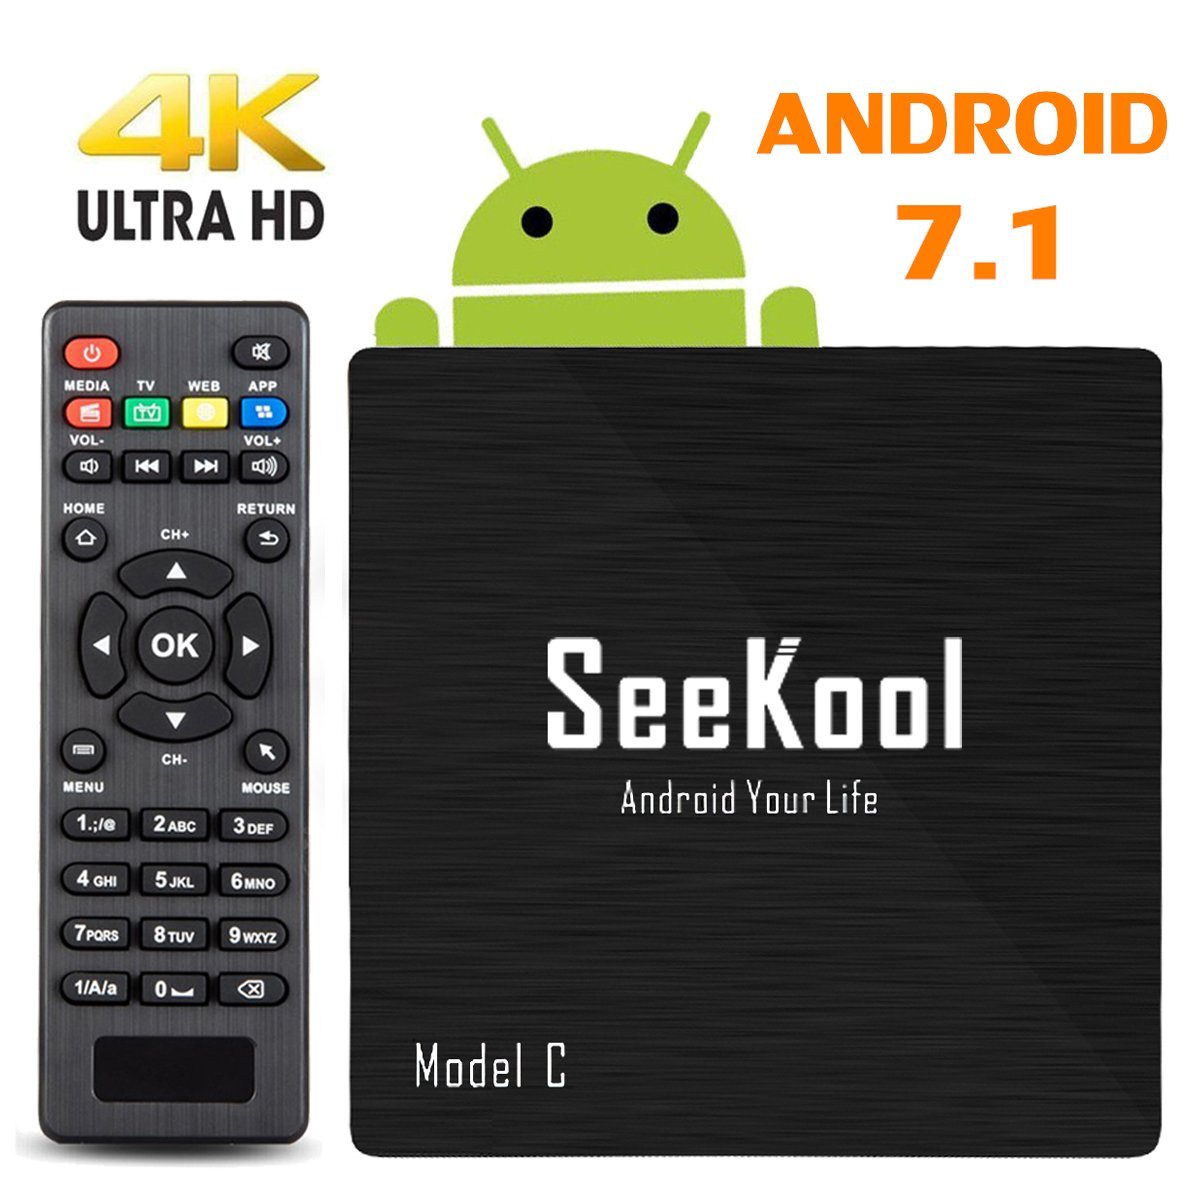 SEEKOOL Model C Android TV Box con 1GB RAM 8GB ROM, 4K